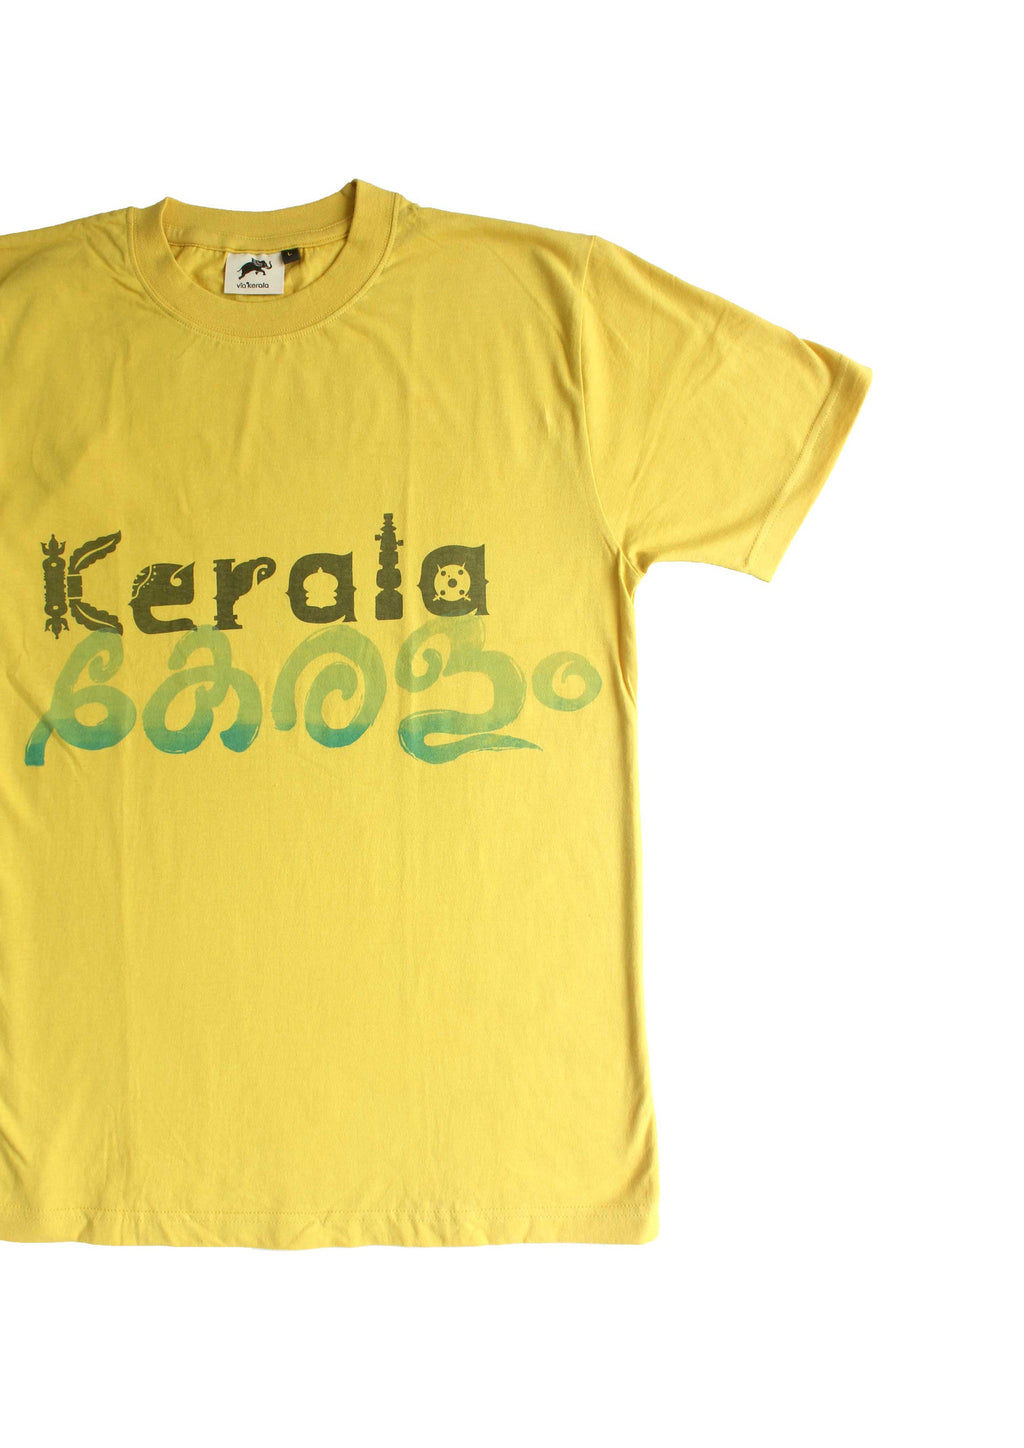 Keralam (New Malayalam) T-shirt